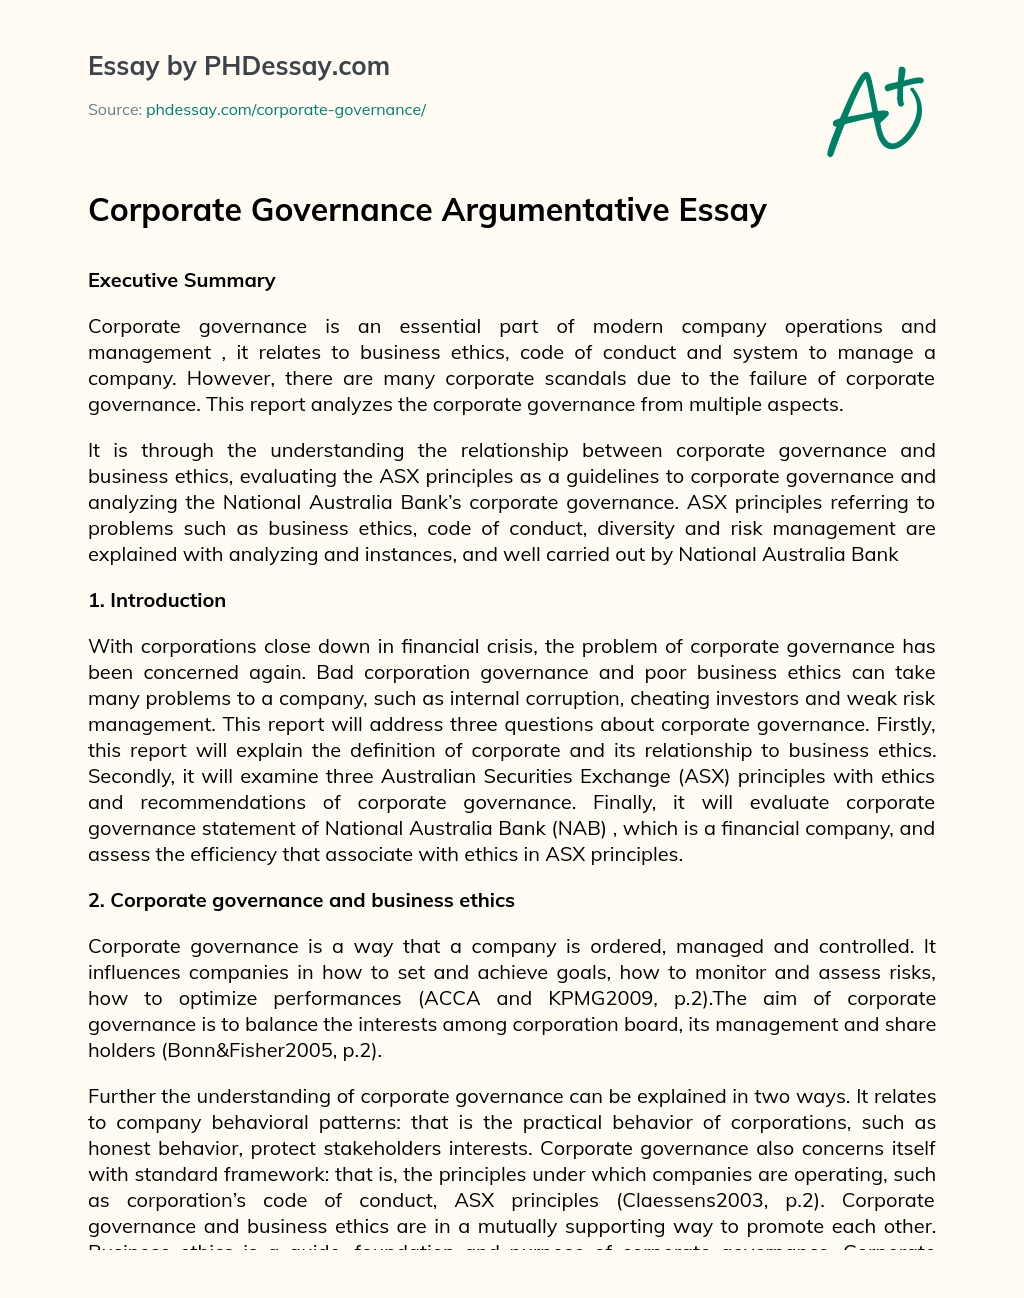 Corporate Governance Argumentative Essay essay